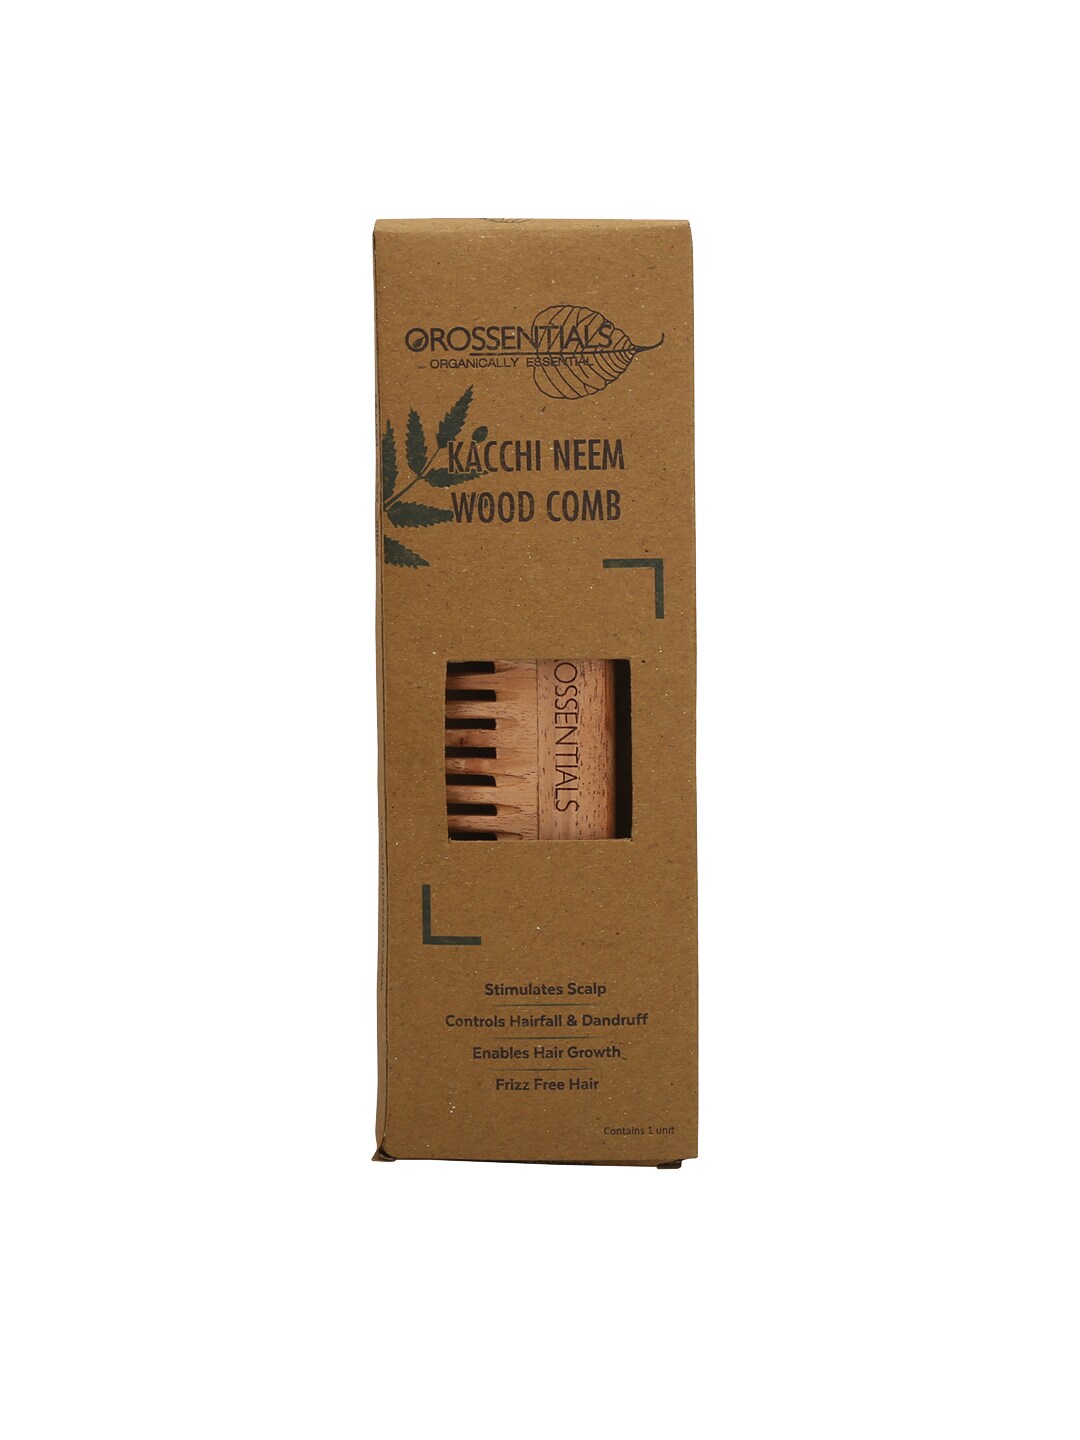 OROSSENTIALS Neem Wooden Comb Price in India